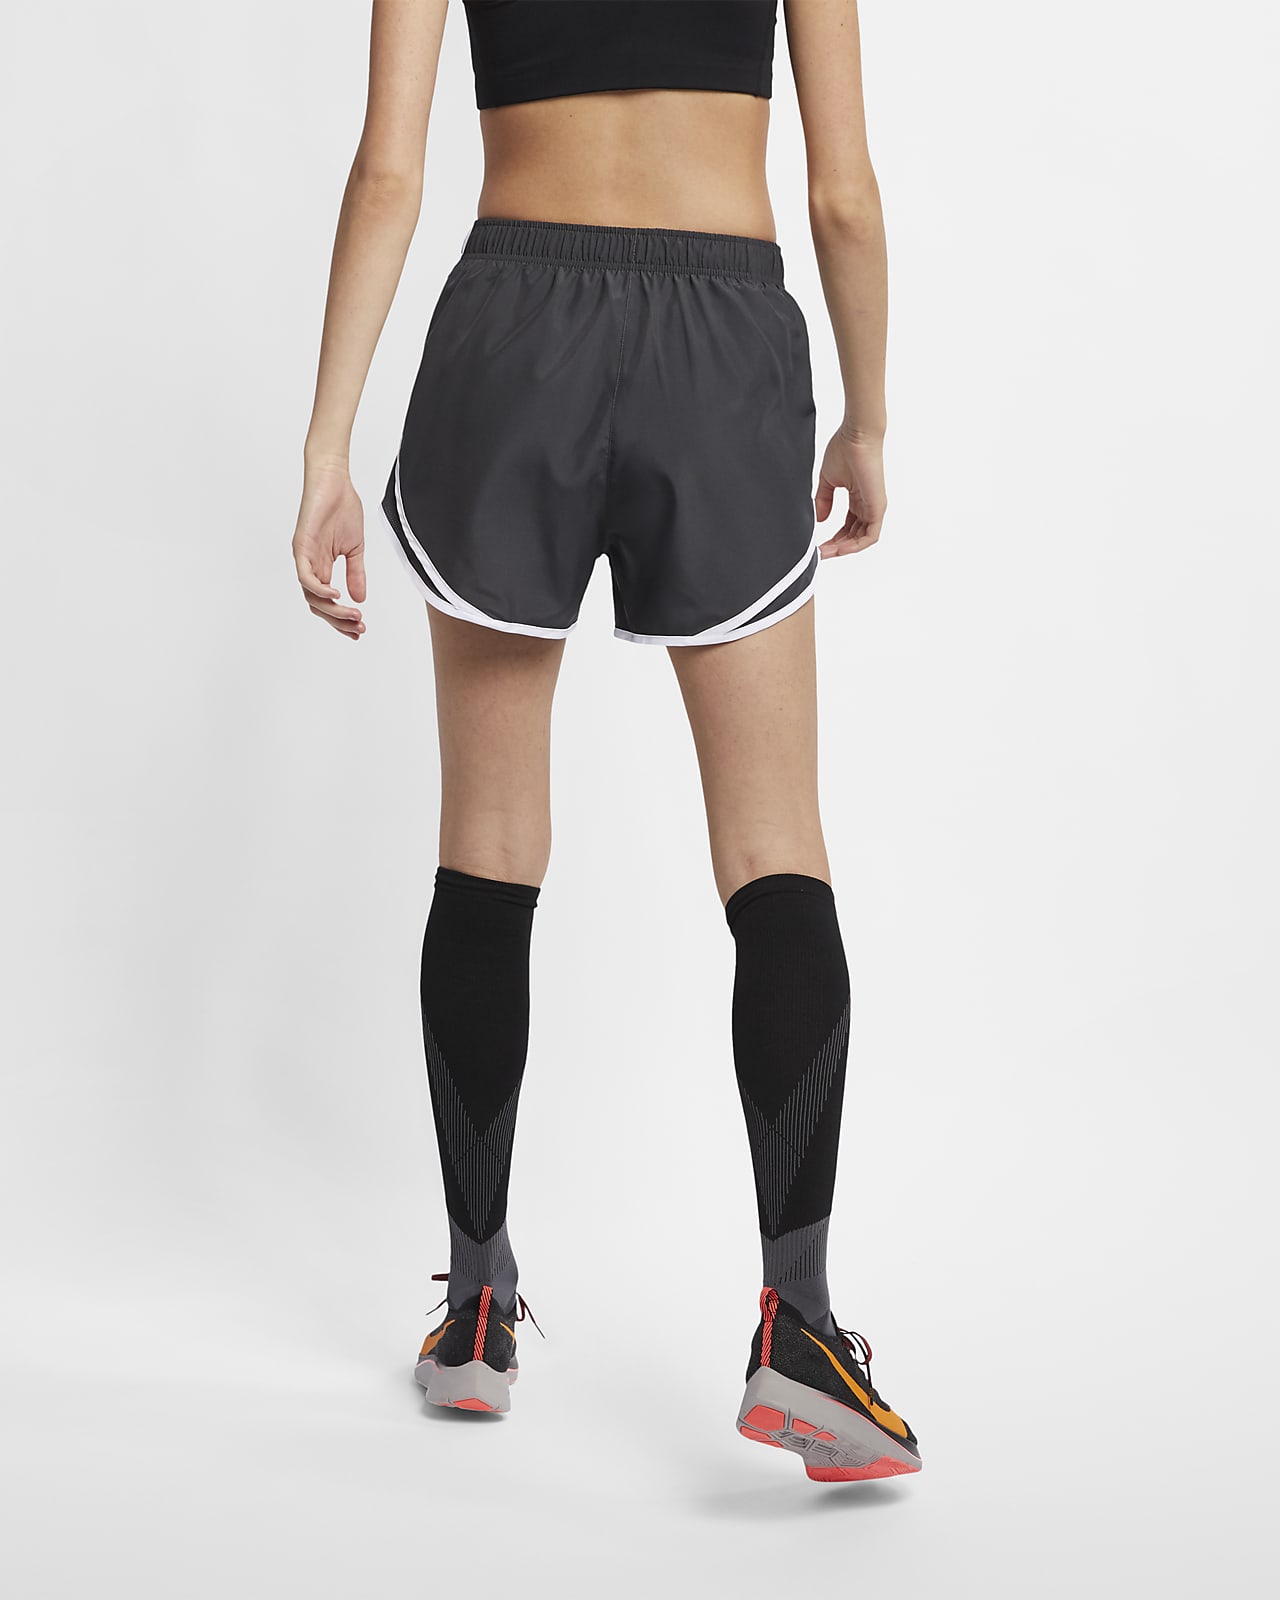 Nike Women's Dry Tempo Short